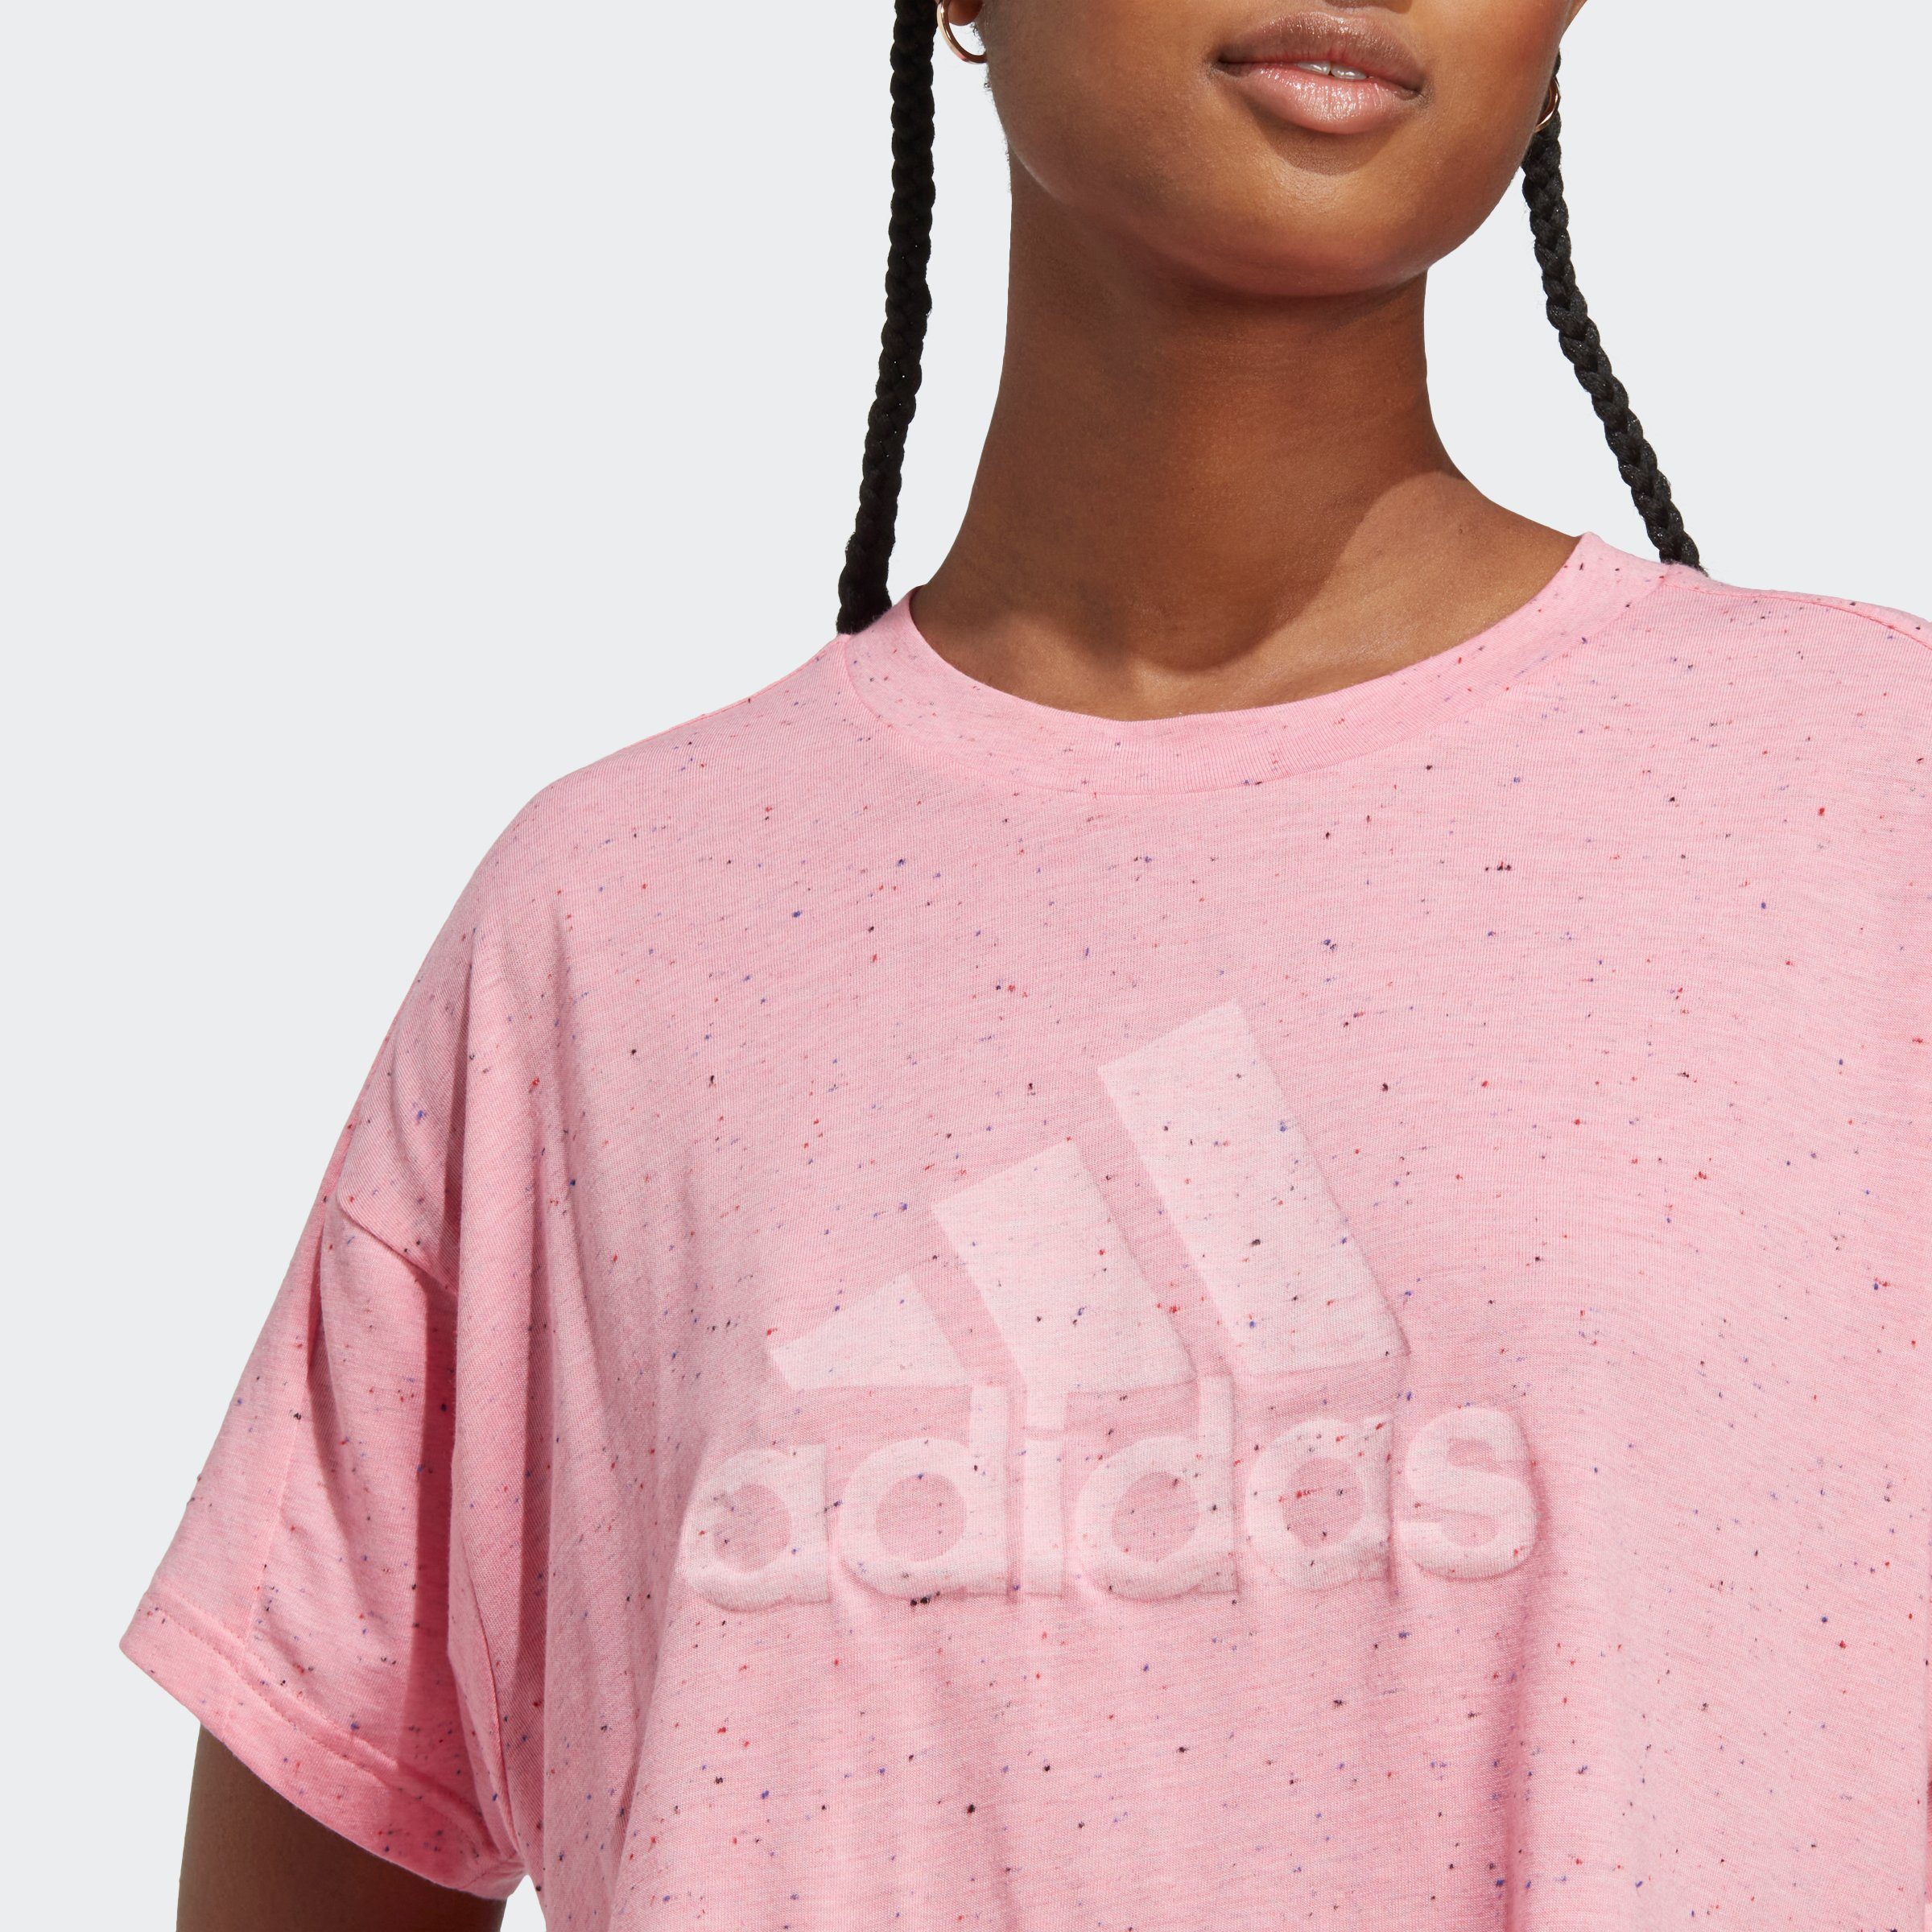 Sportswear ICONS Bliss WINNERS FUTURE / White Pink T-Shirt adidas Mel.